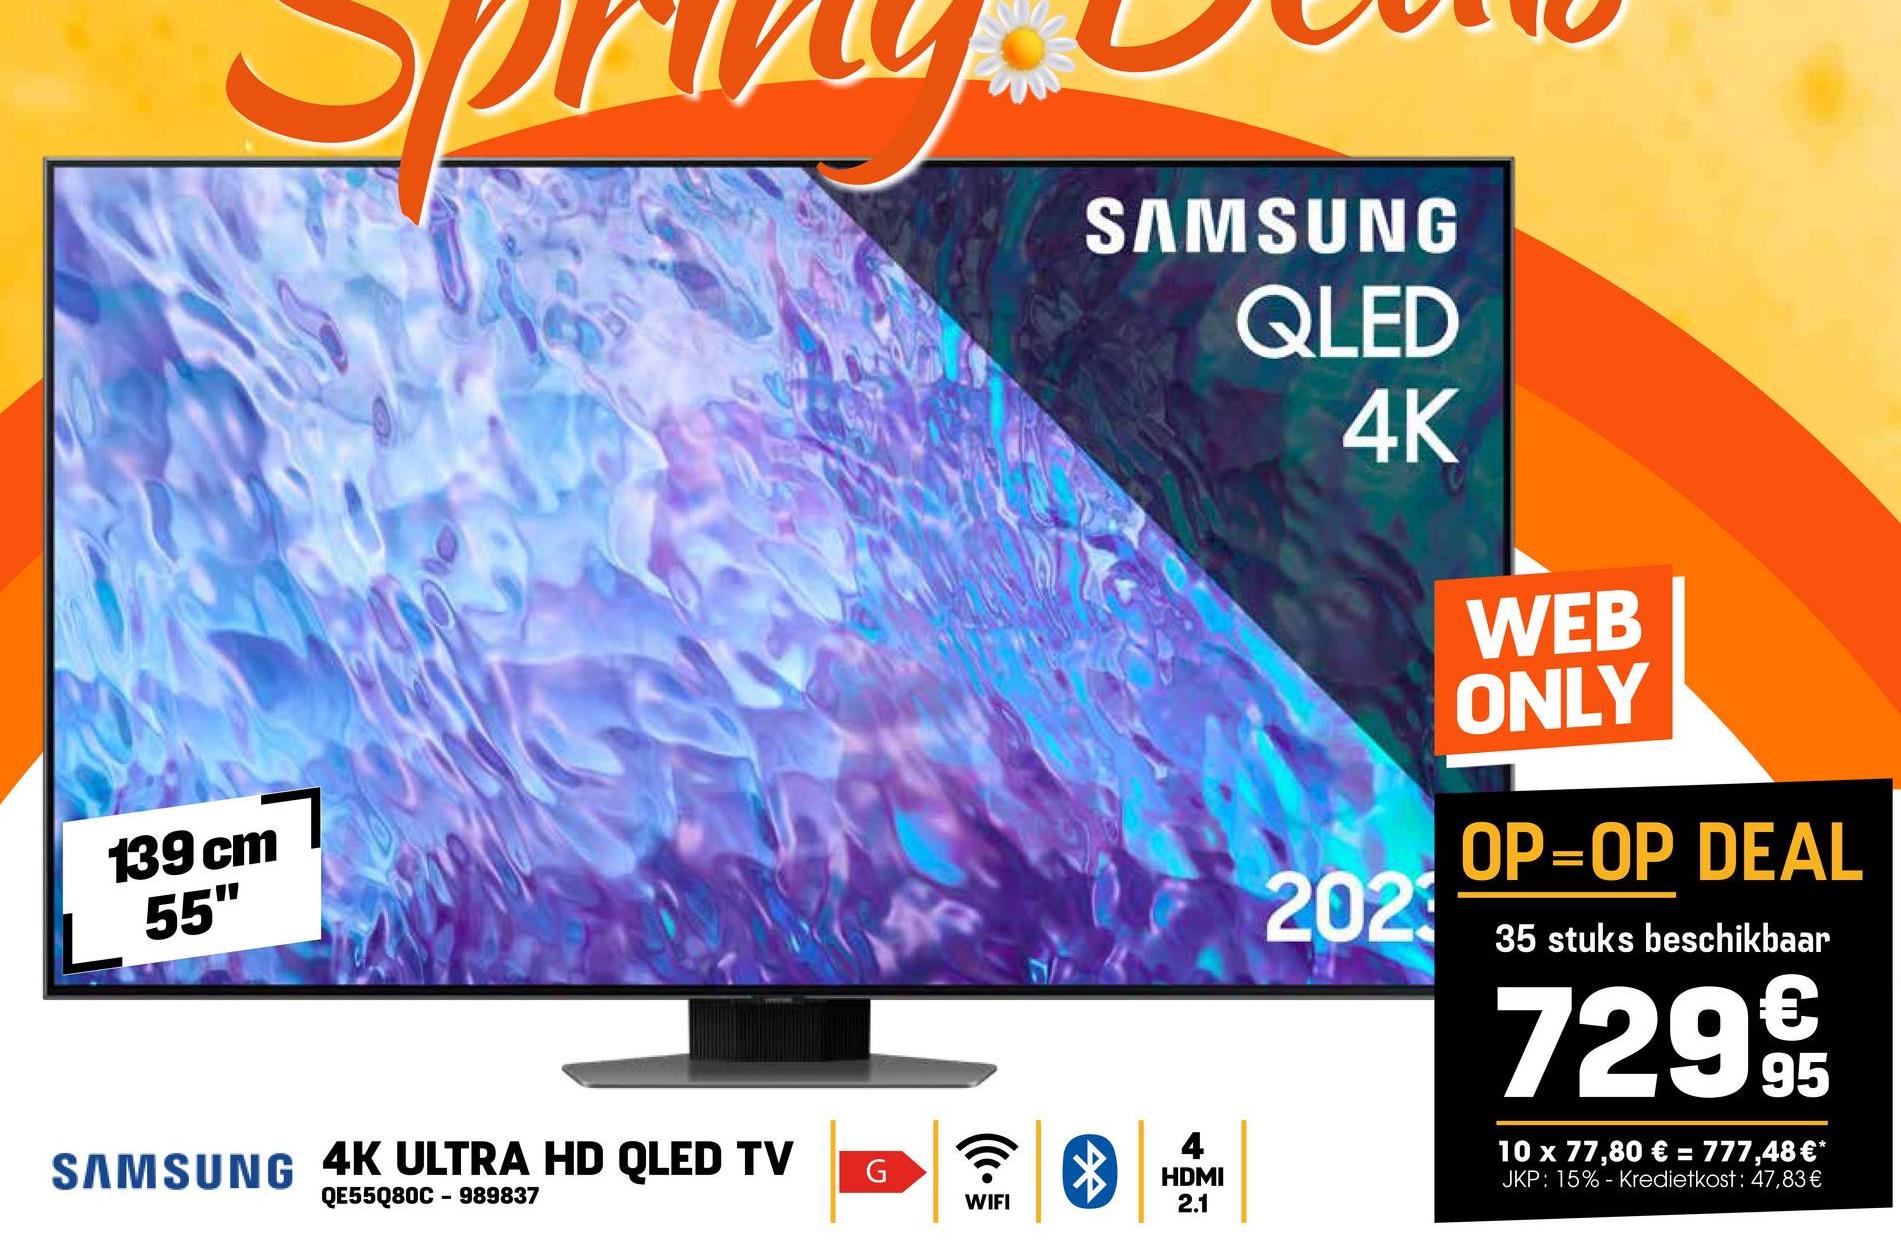 139 cm
55"
SAMSUNG 4K ULTRA HD QLED TV
QE55Q80C-989837
G
WIFI
SAMSUNG
QLED
4K
*
4
HDMI
2.1
2023
WEB
ONLY
OP=OP DEAL
35 stuks beschikbaar
7299
10 x 77,80 € = 777,48 €*
JKP: 15% - Kredietkost: 47,83 €